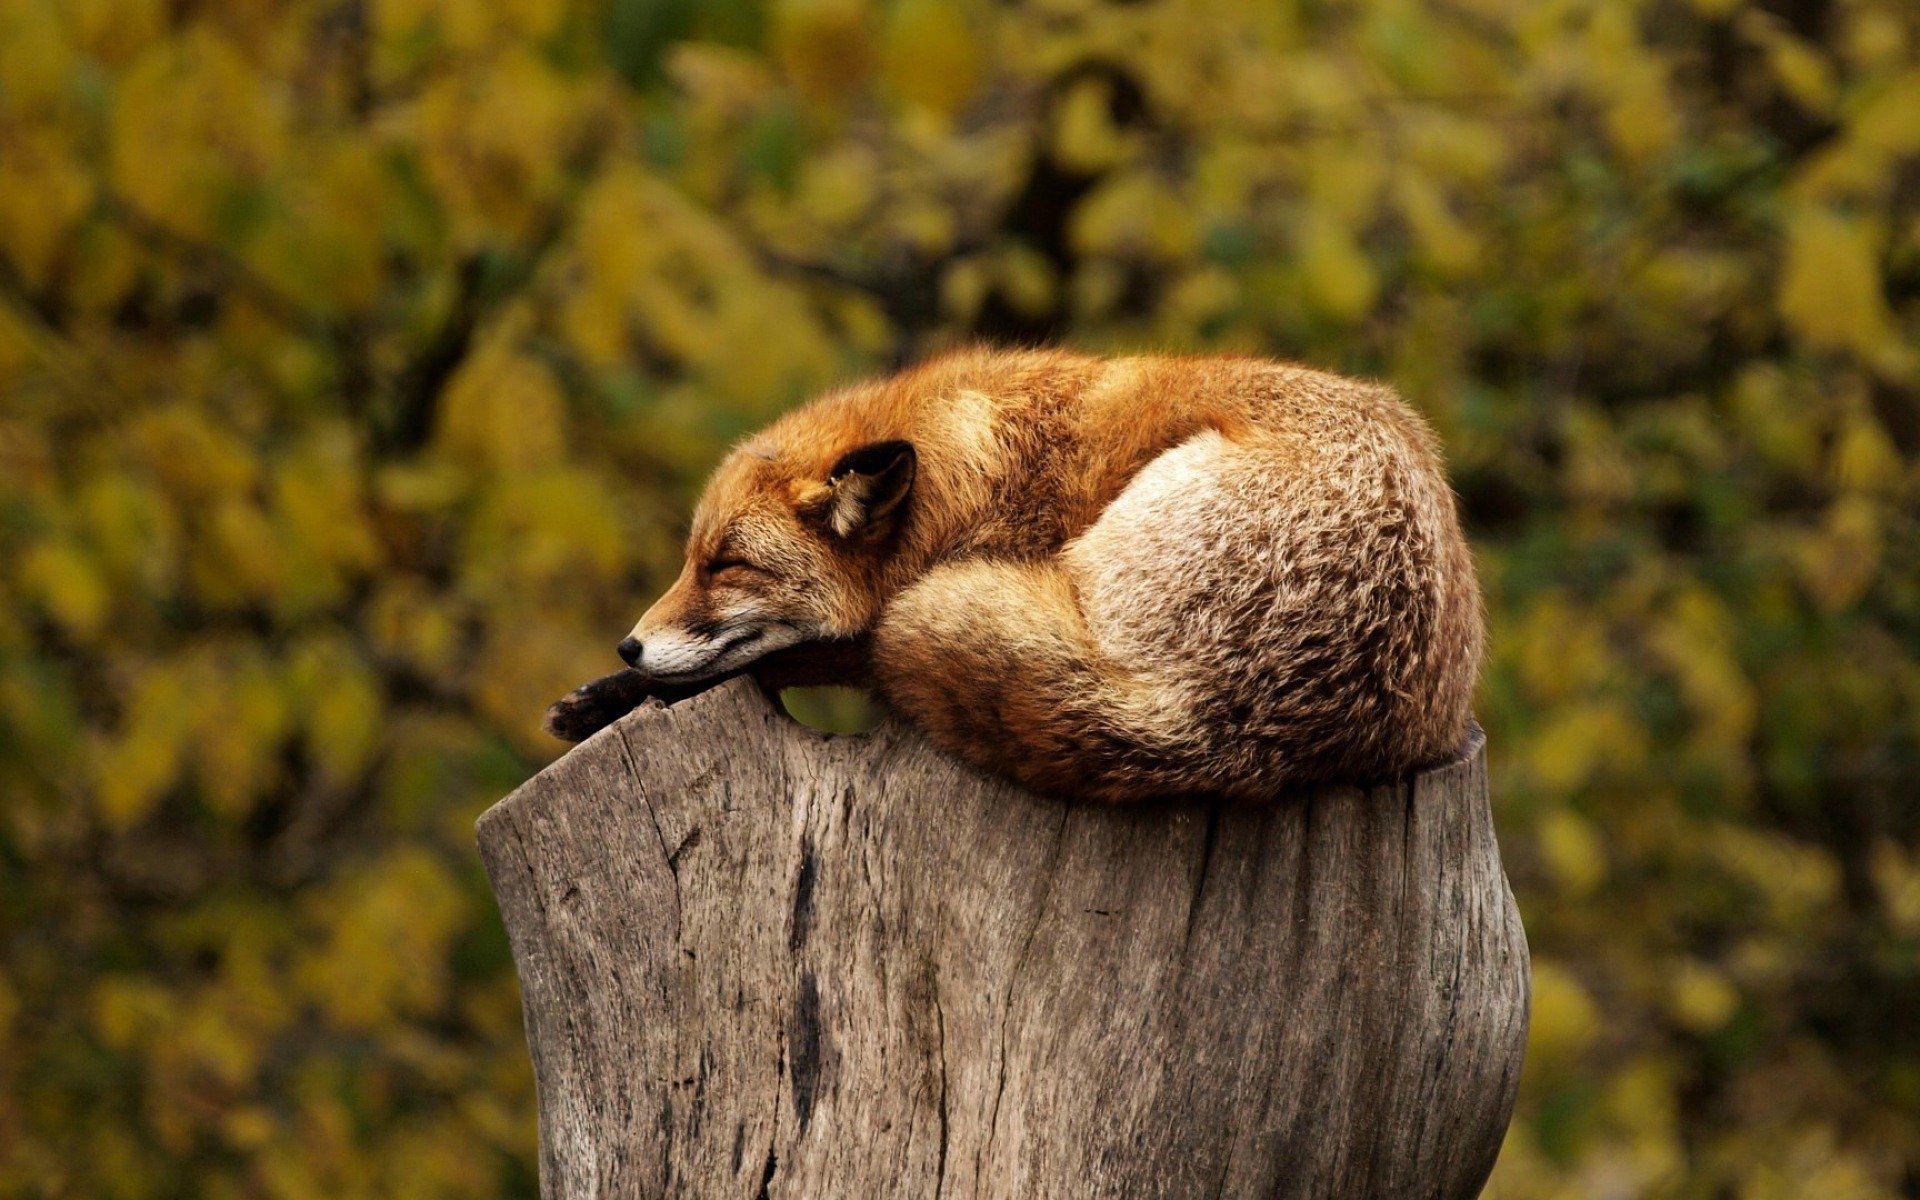 Fox sleeping on a log